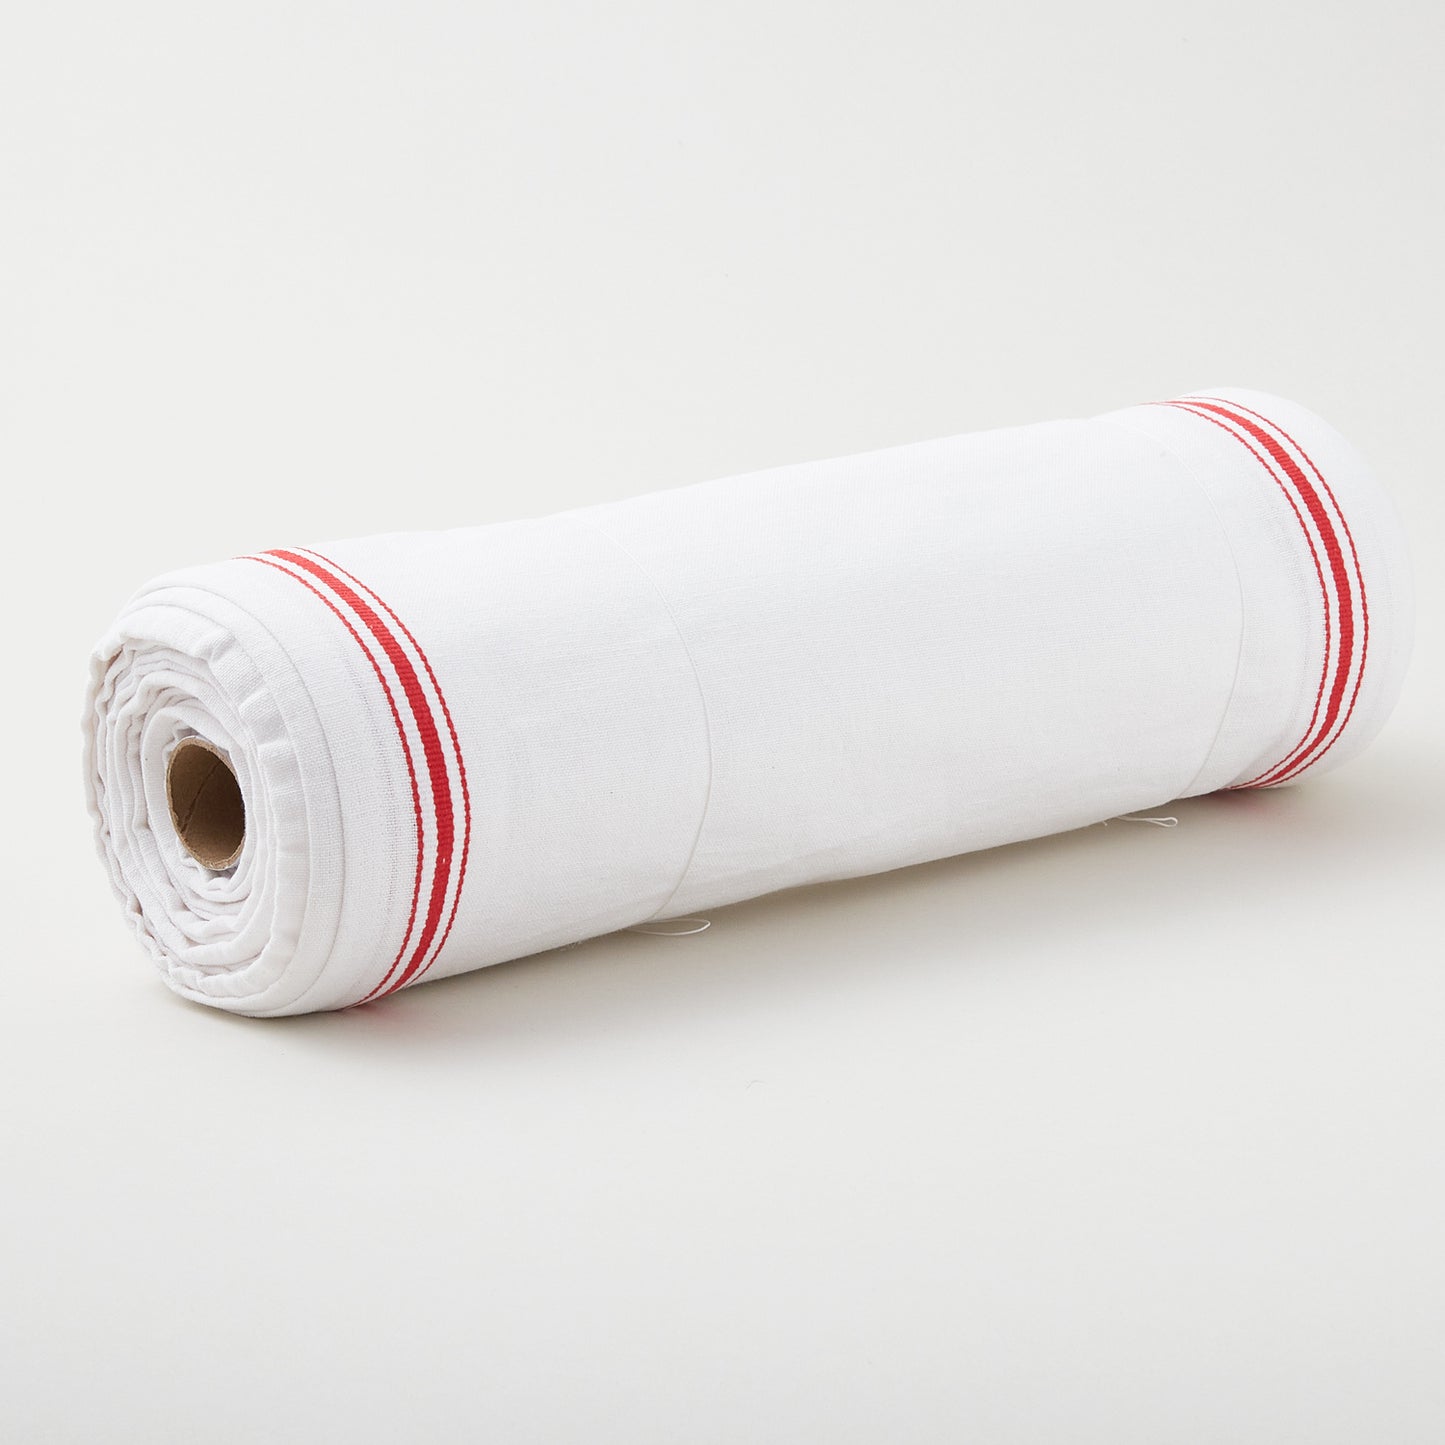 Toweling Basics - Skinny Stripe White Red Yardage Alternative View #1